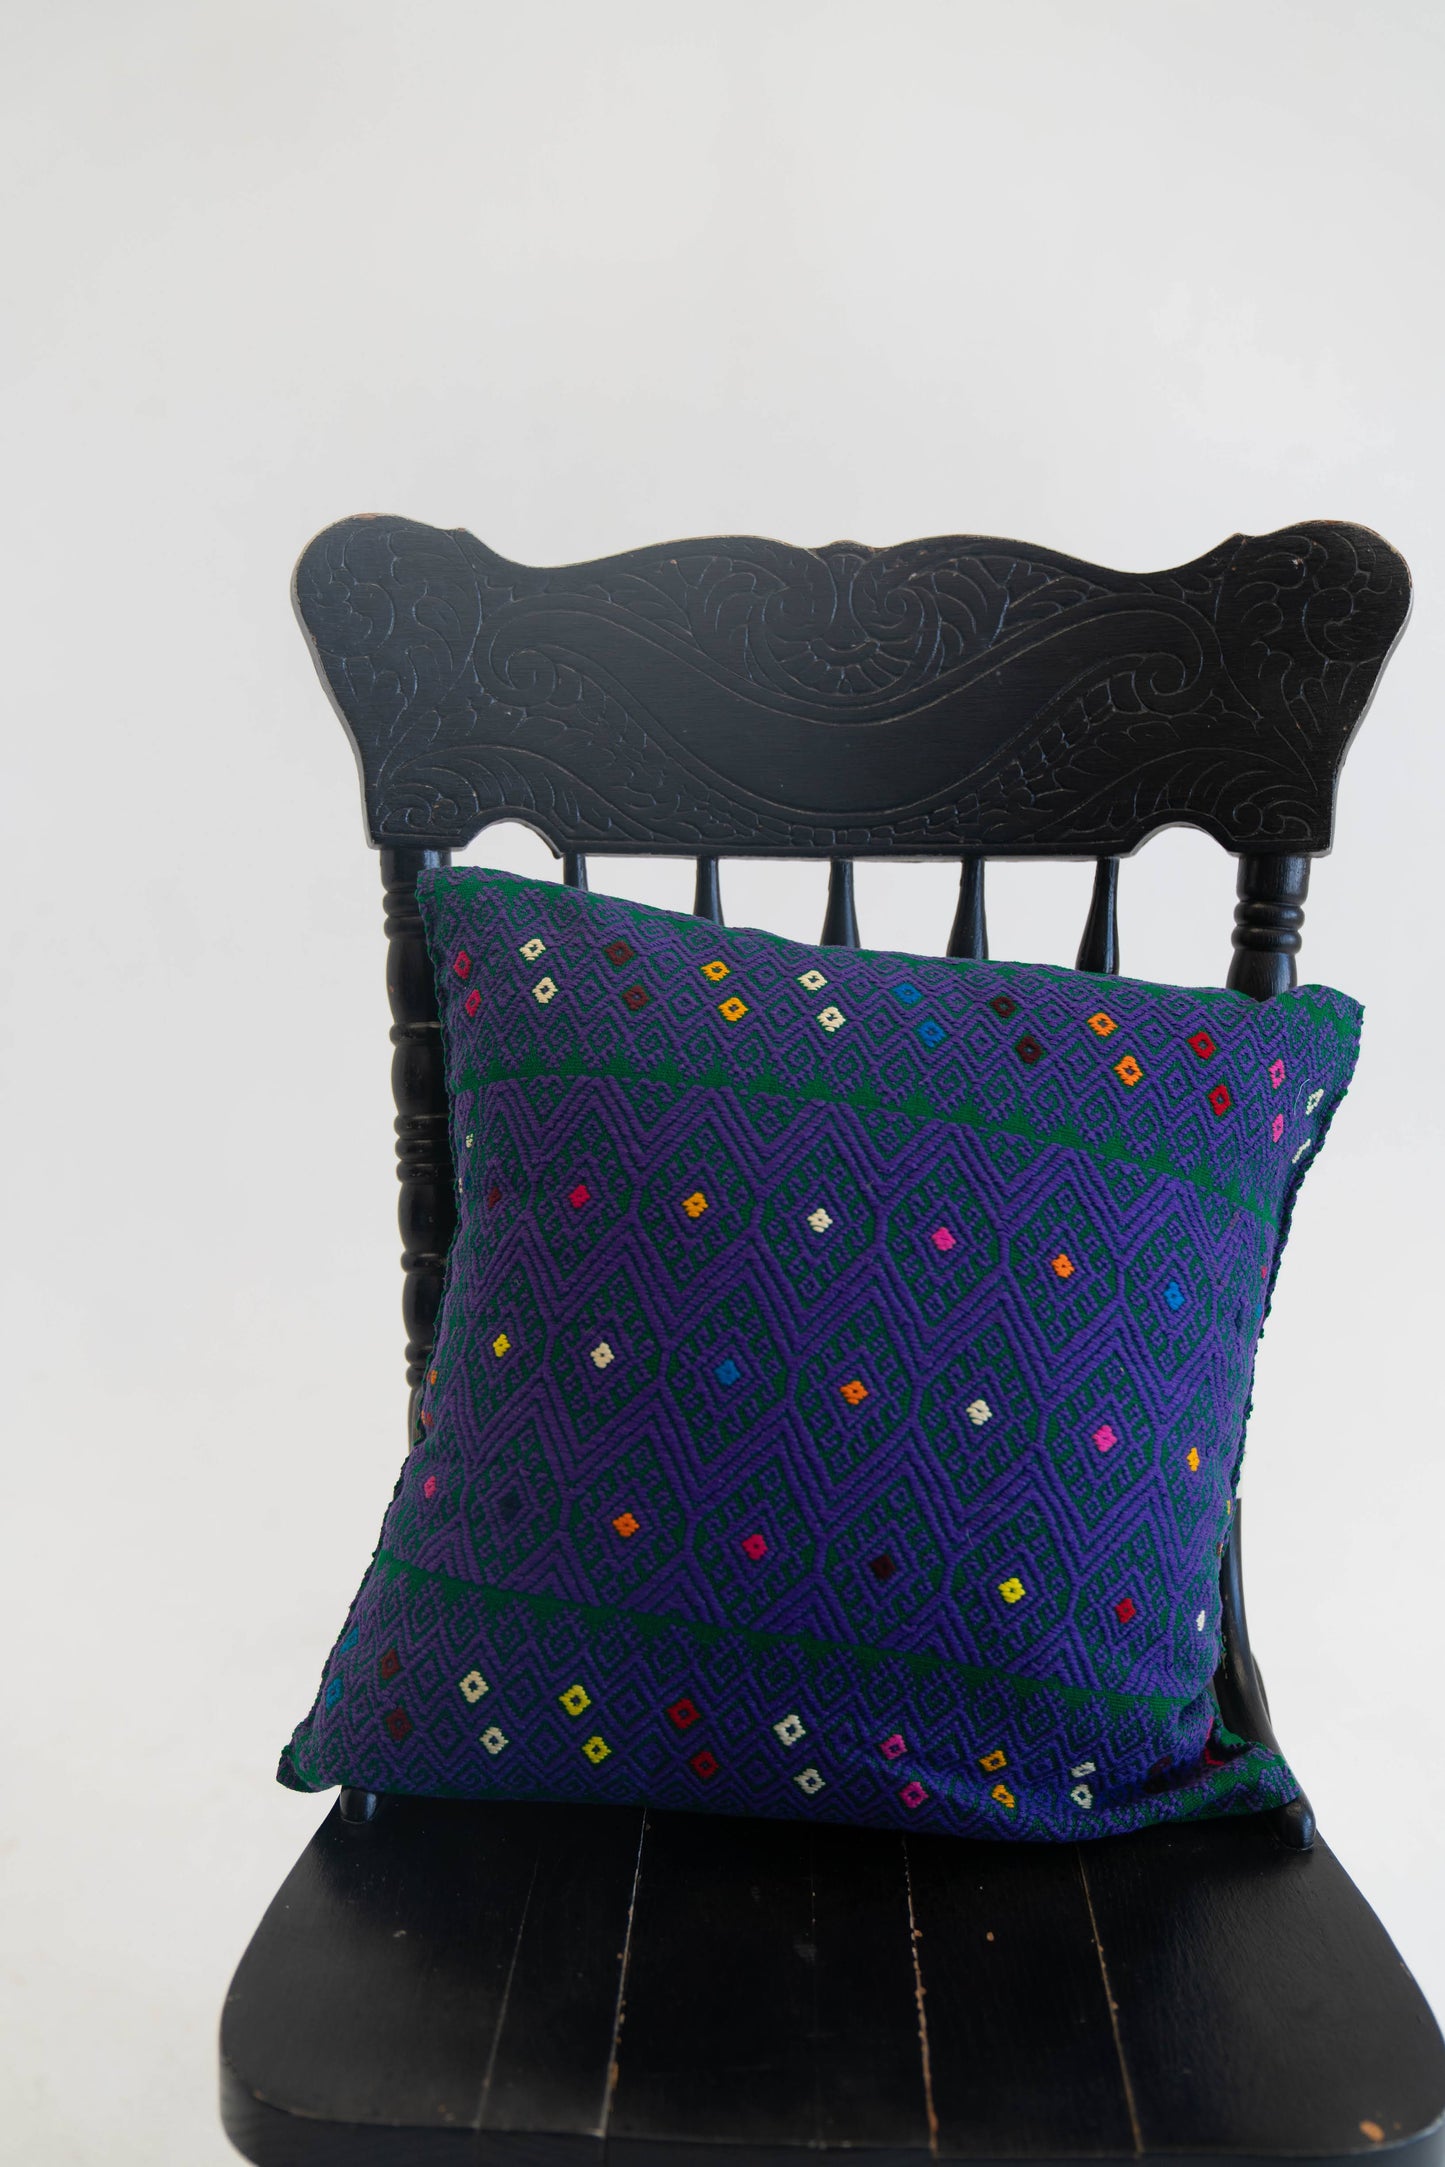 17x17 Holbox Throw Pillows Pink Pueblo Designs